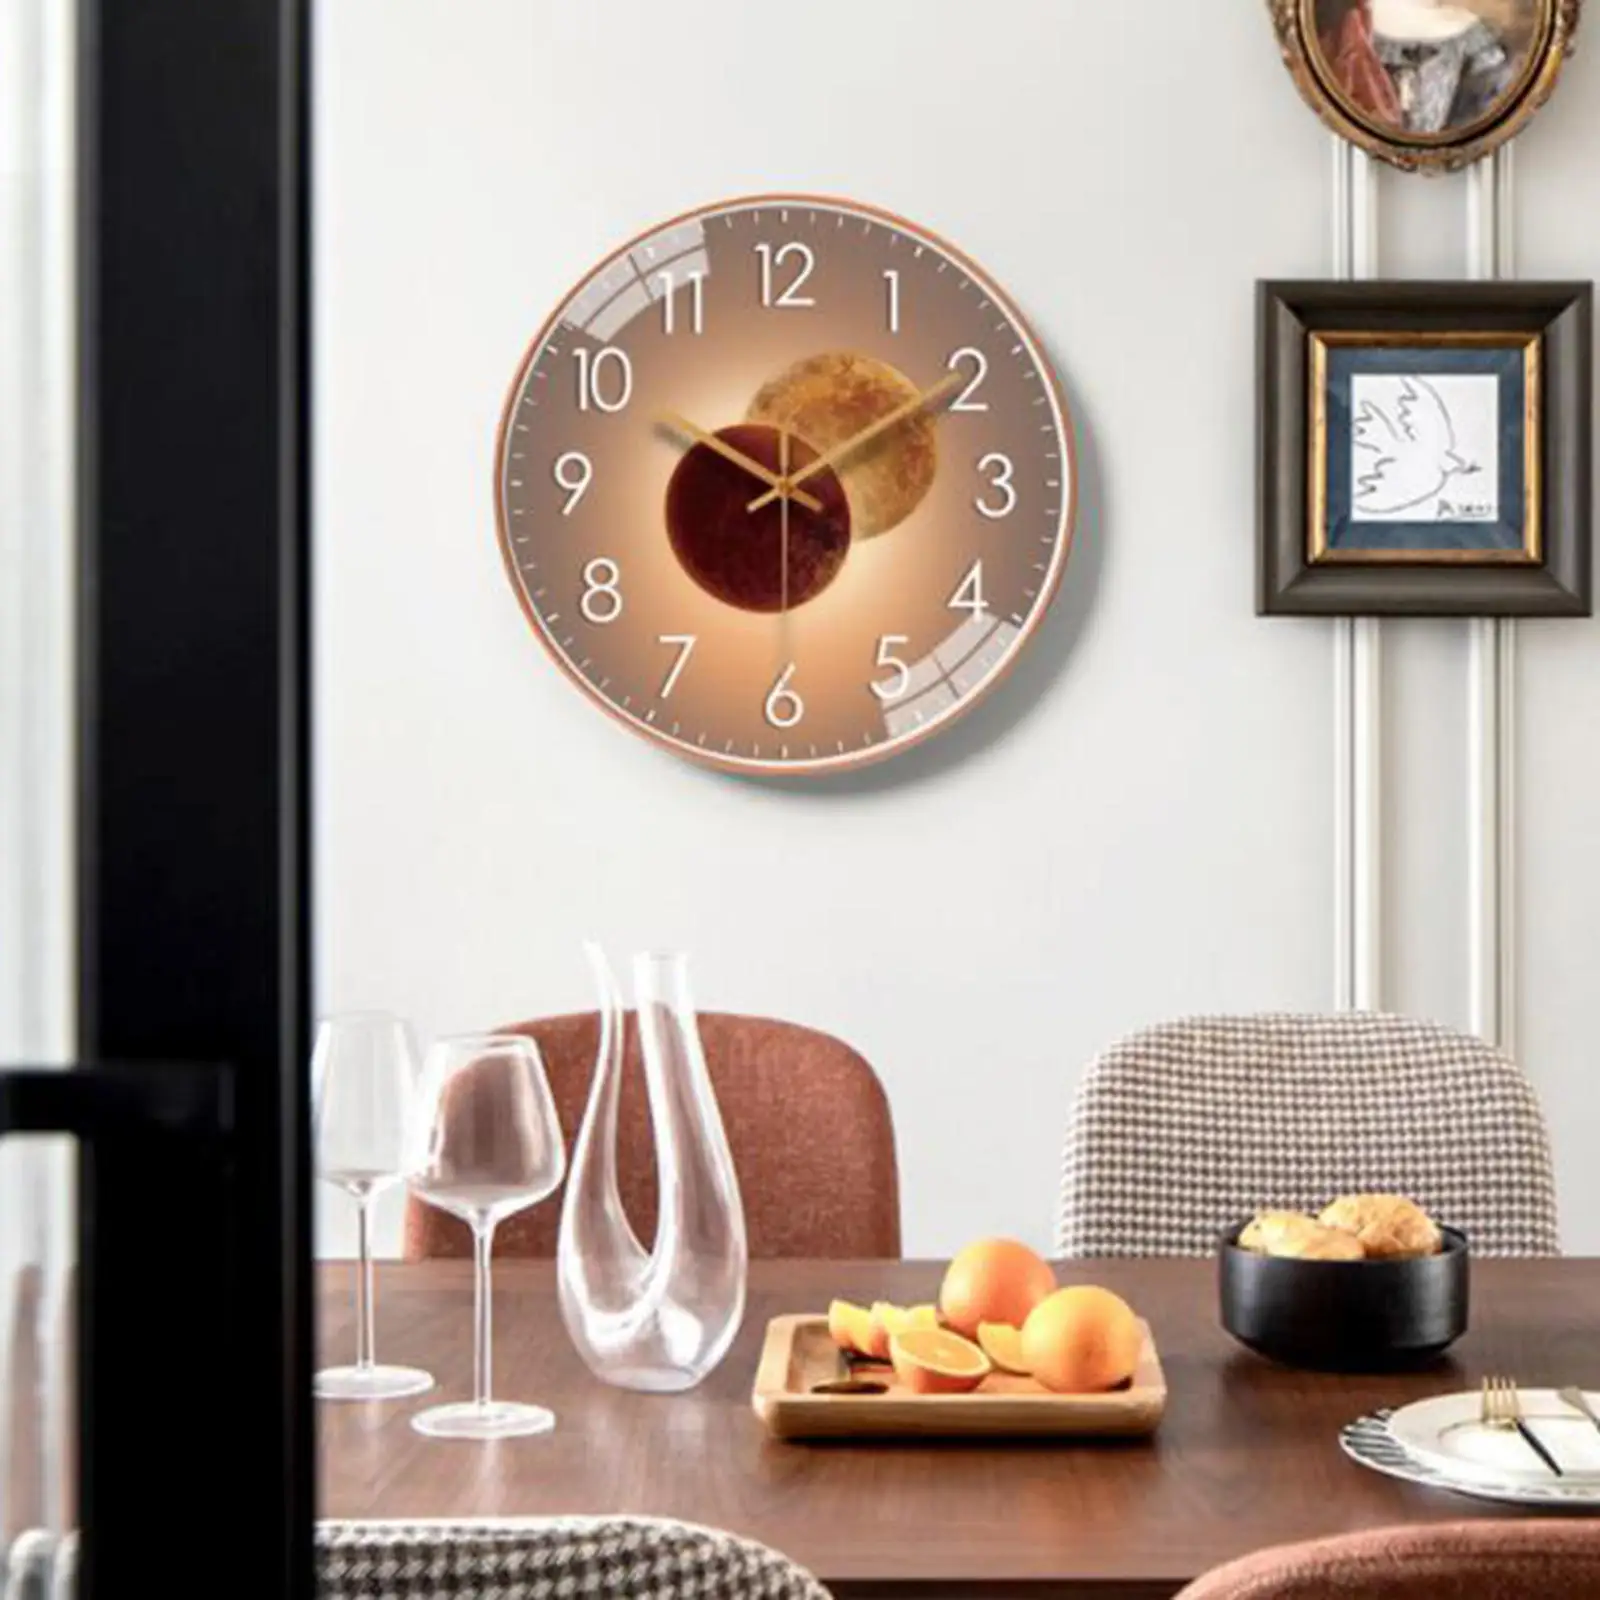 30cm Large Round Digital Wall Clock Watch Silent Quartz Indoor Classroom School Home Office Hotel Shops Cafe Clocks Decoration